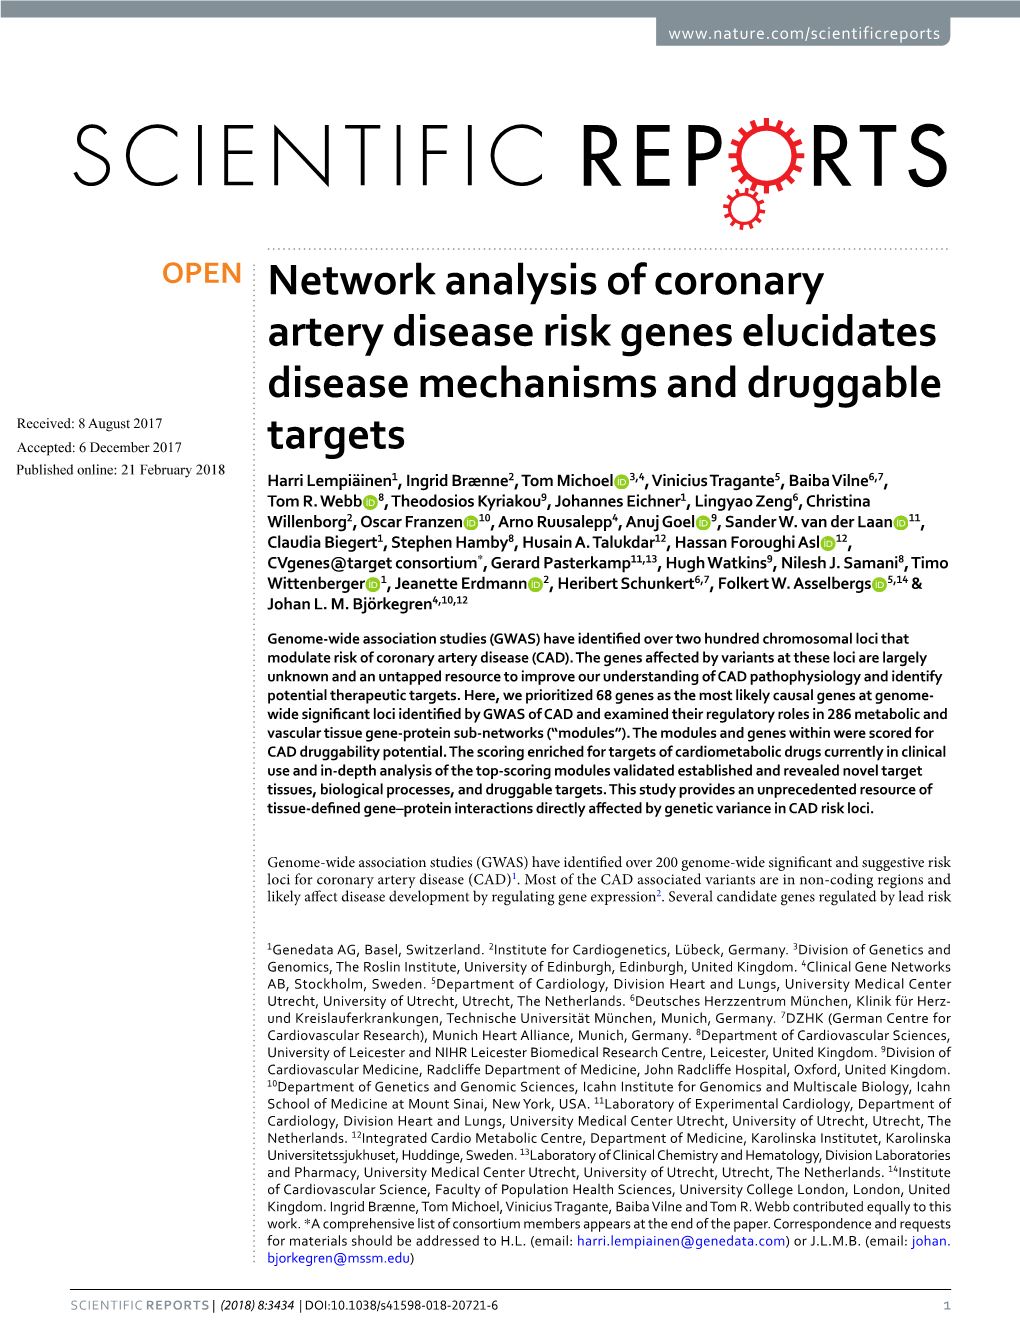 Network Analysis of Coronary Artery Disease Risk Genes Elucidates